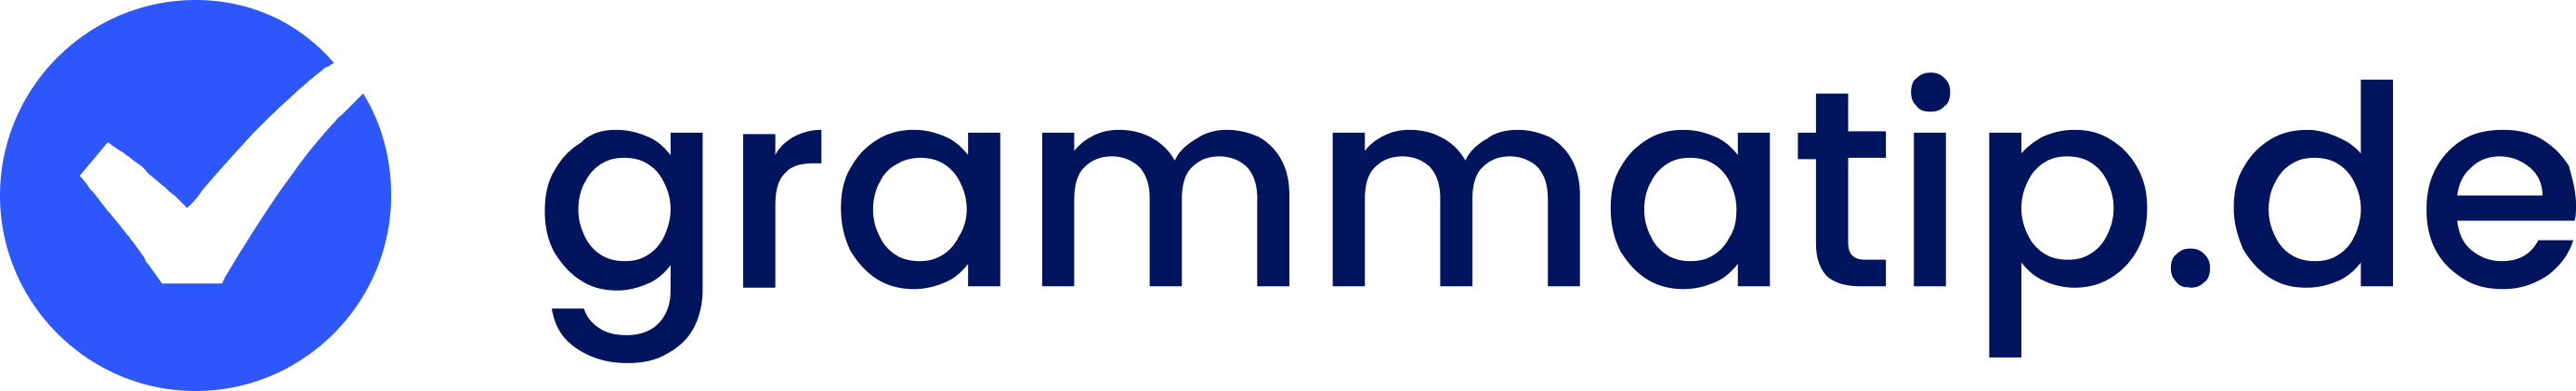 Lemma GmbH Grammatip